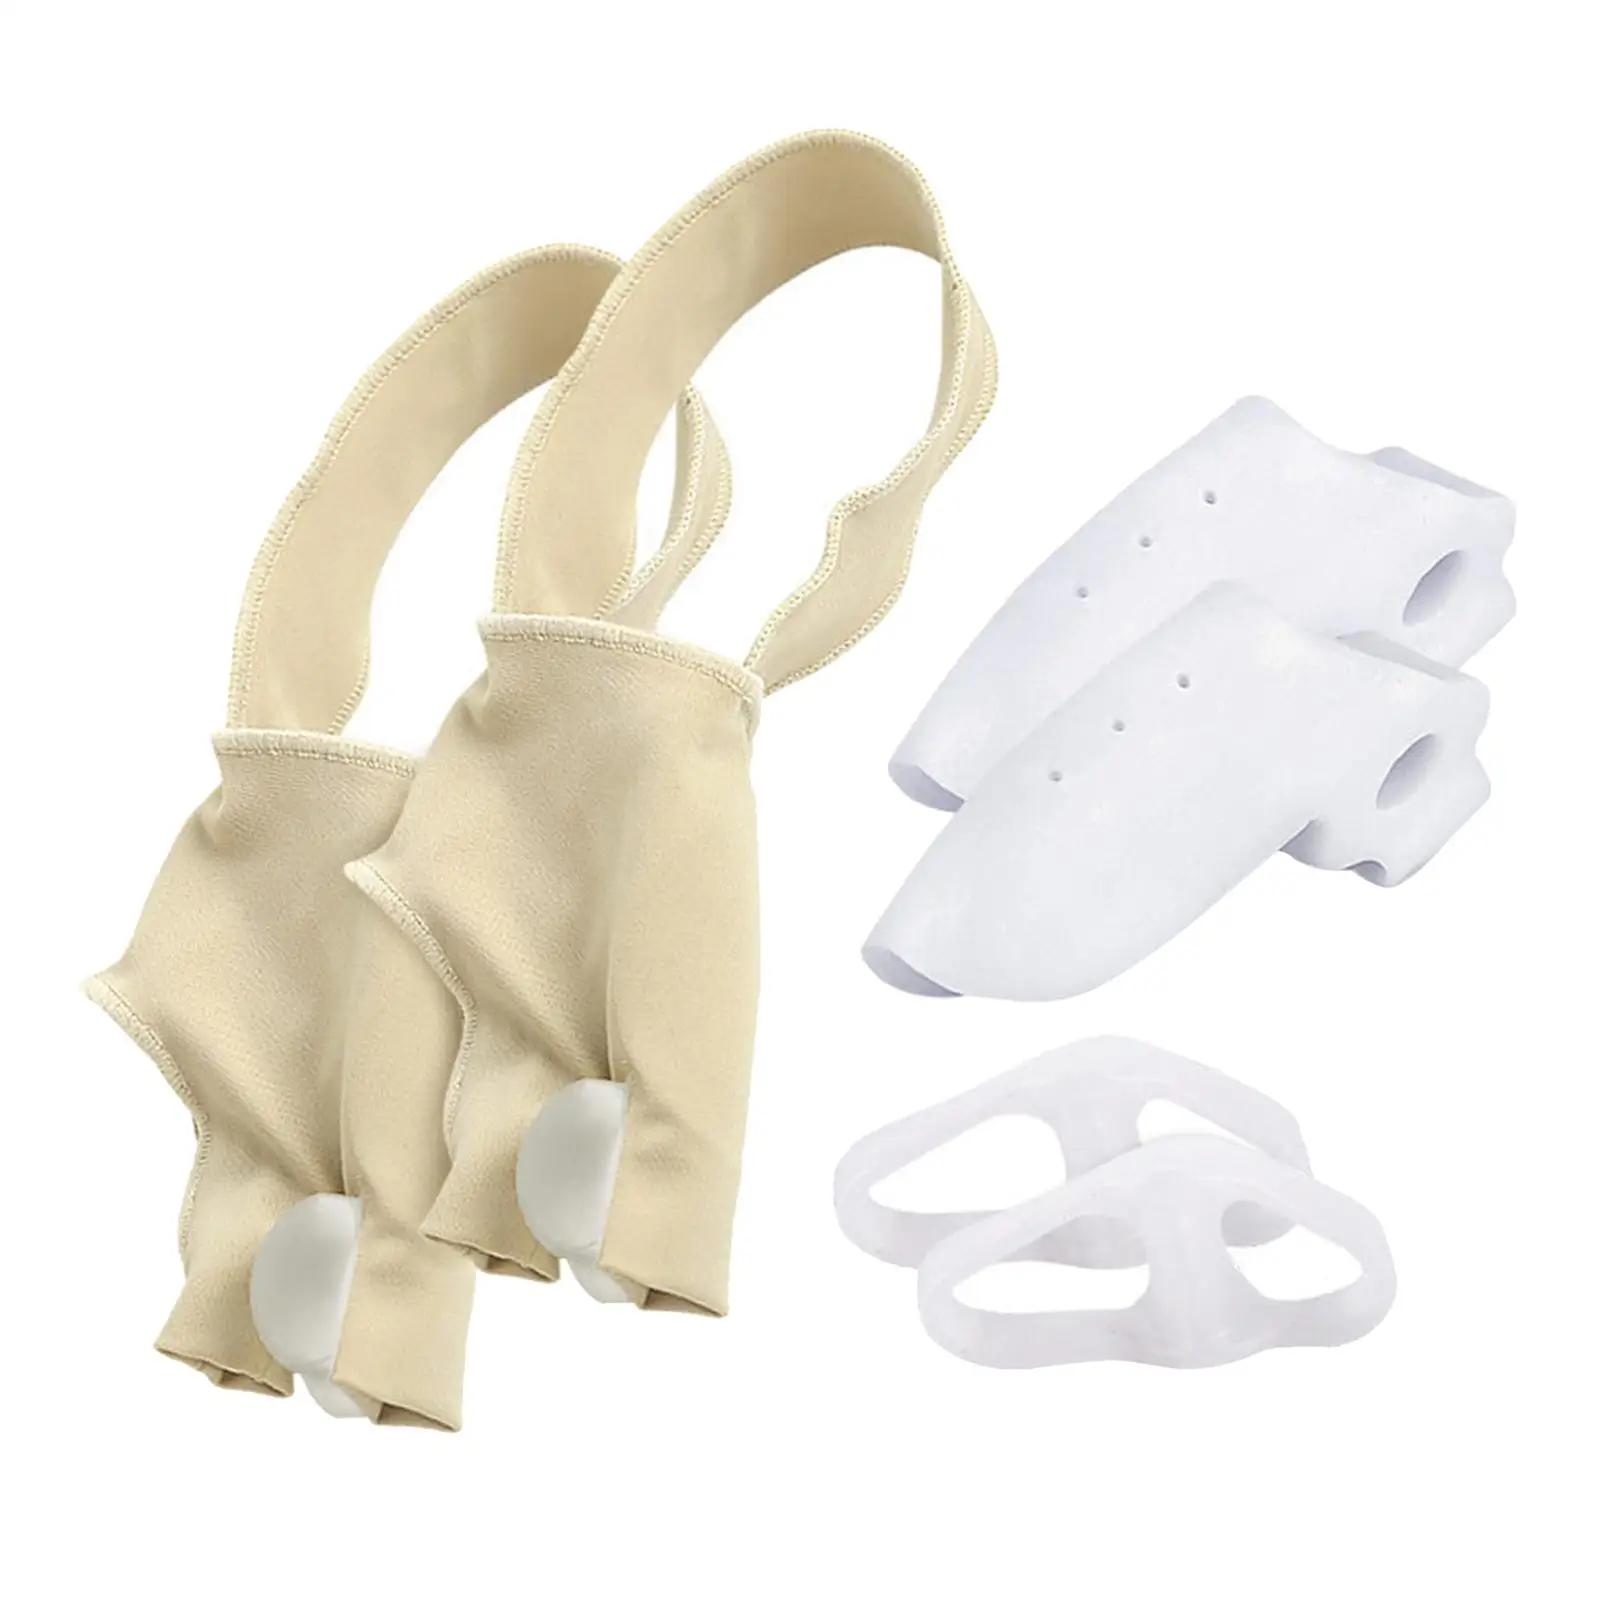 Bunion Corrector Kit Soft Feet Care Tool Hallux Valgus Correction Bunion Pads Sleeves Brace